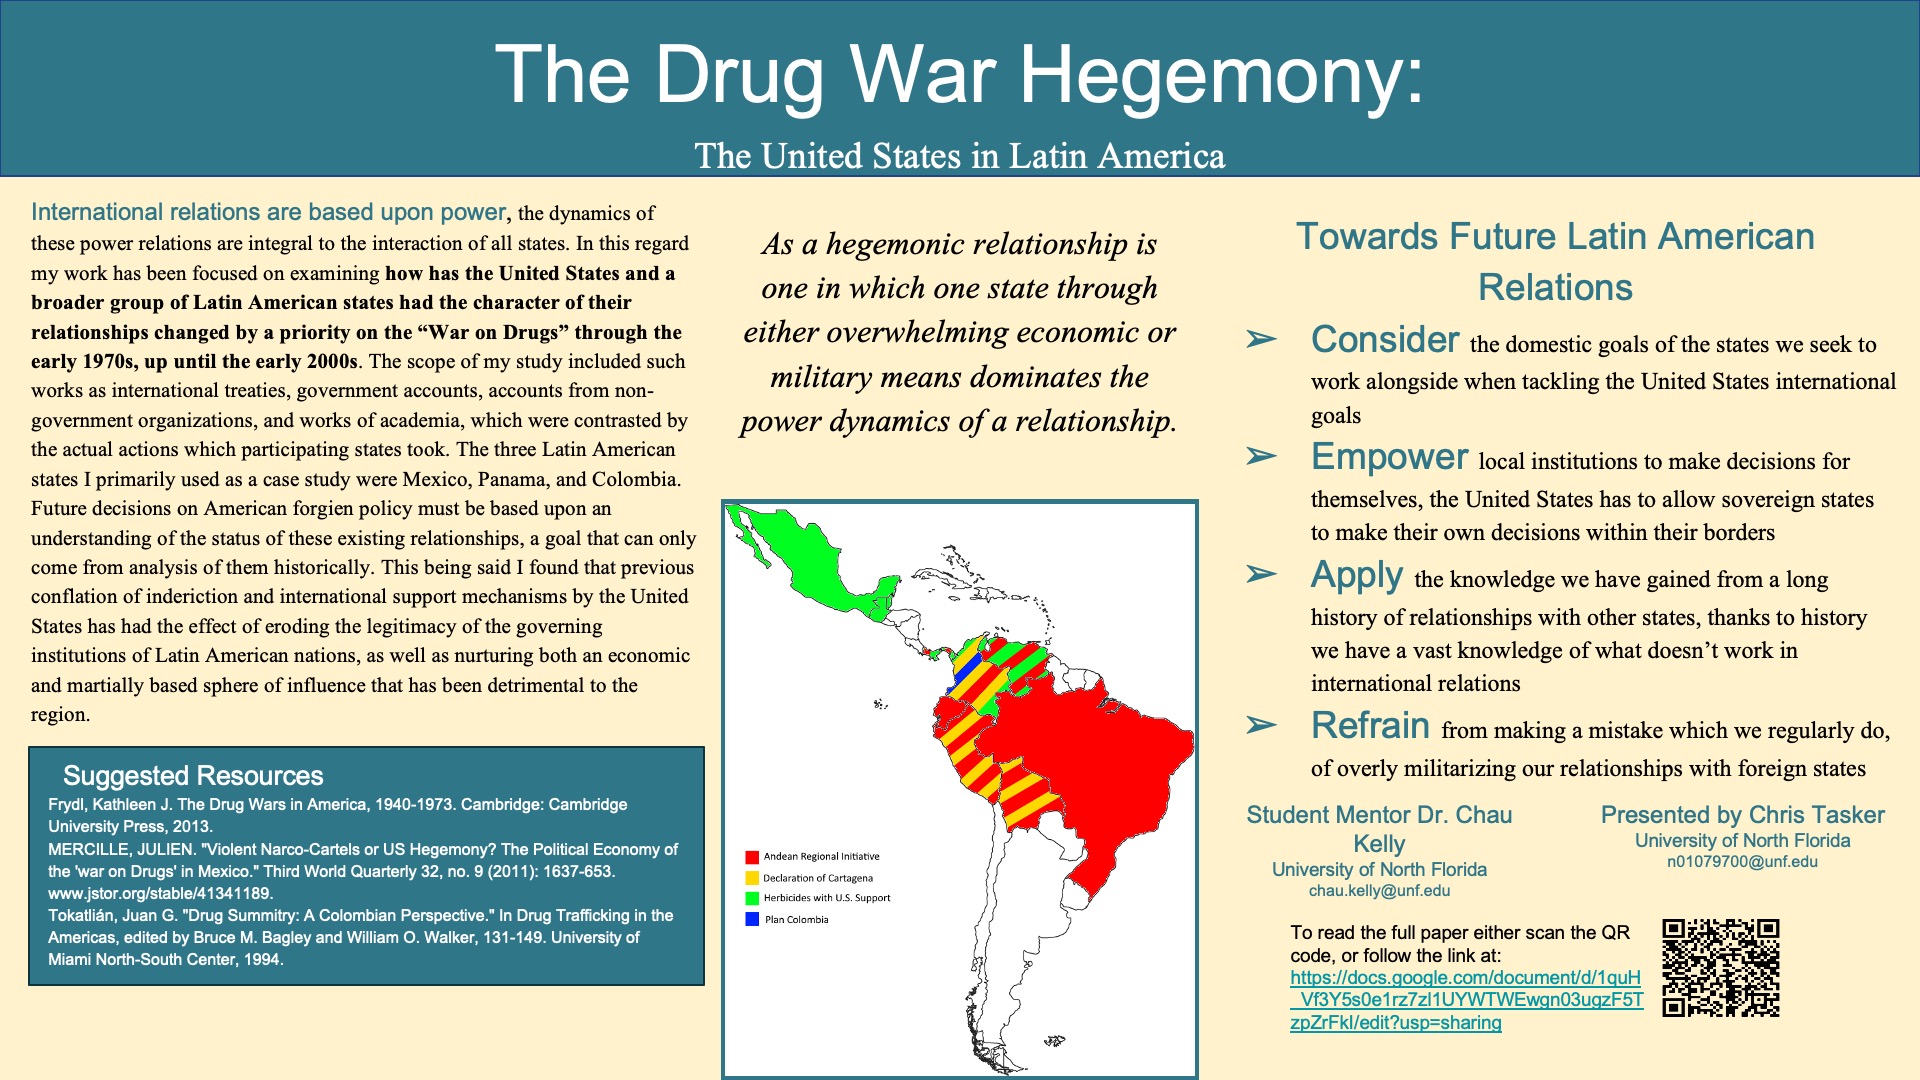 The Drug War Hegemony poster